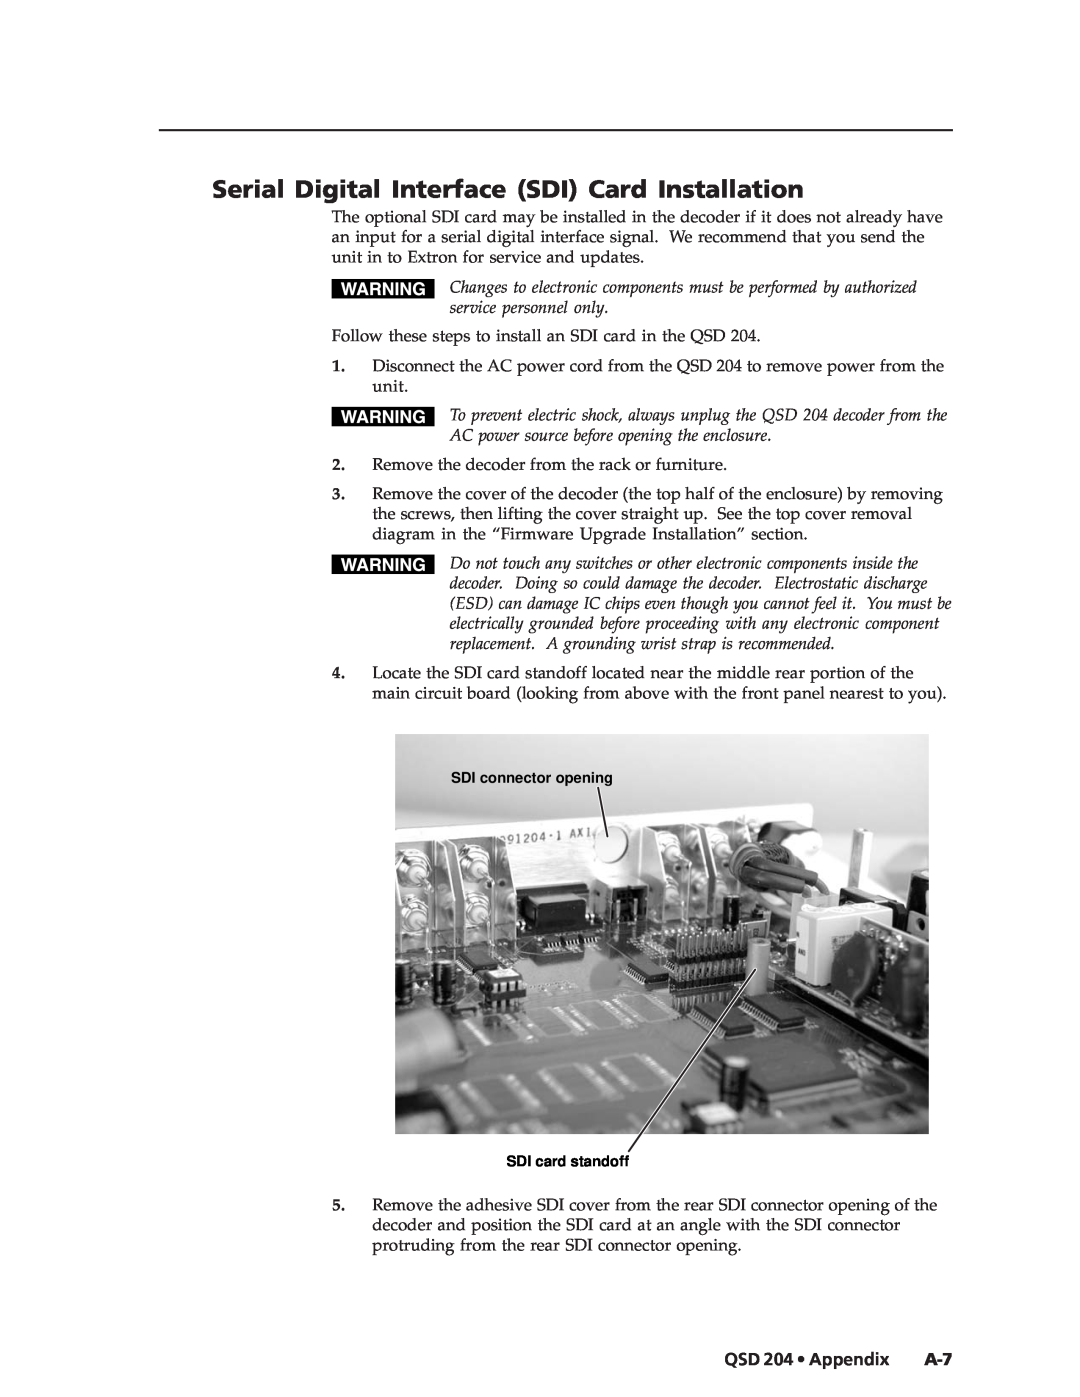 Extron electronic QSD 204 D manual Serial Digital Interface SDI Card Installation, QSD 204 Appendix A-7 